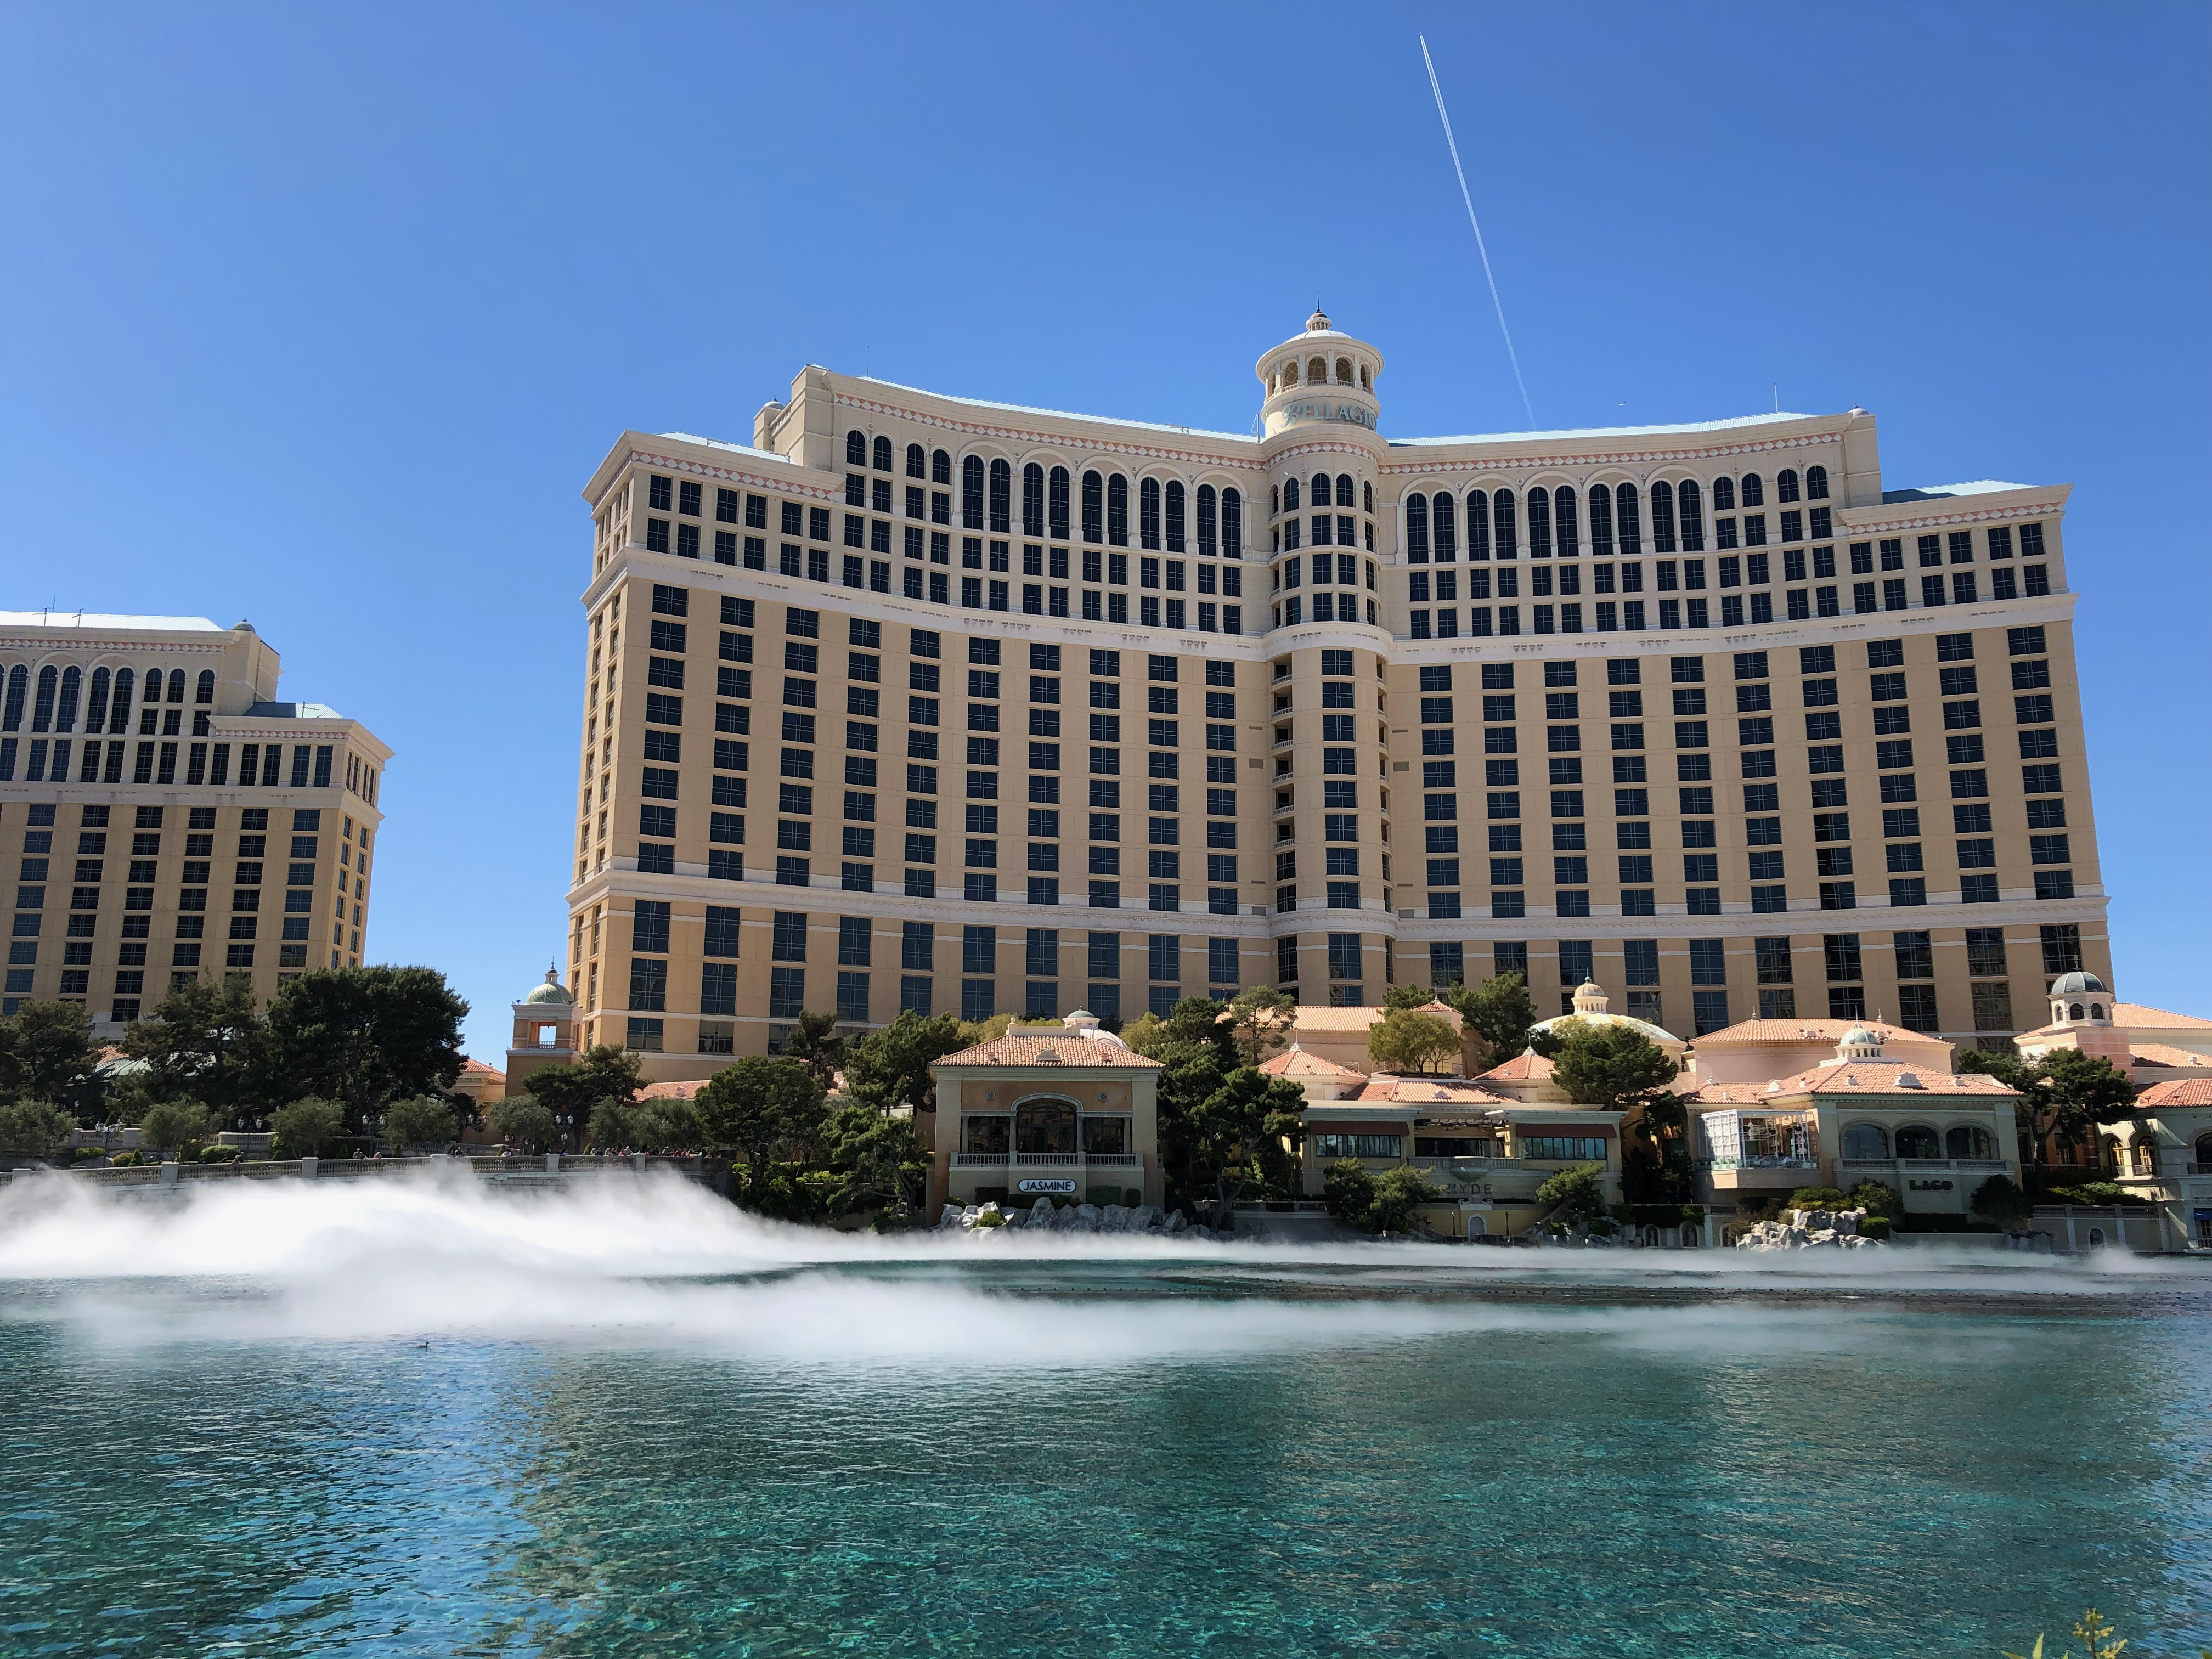 View of the Bellagio Hotel in Las Vegas